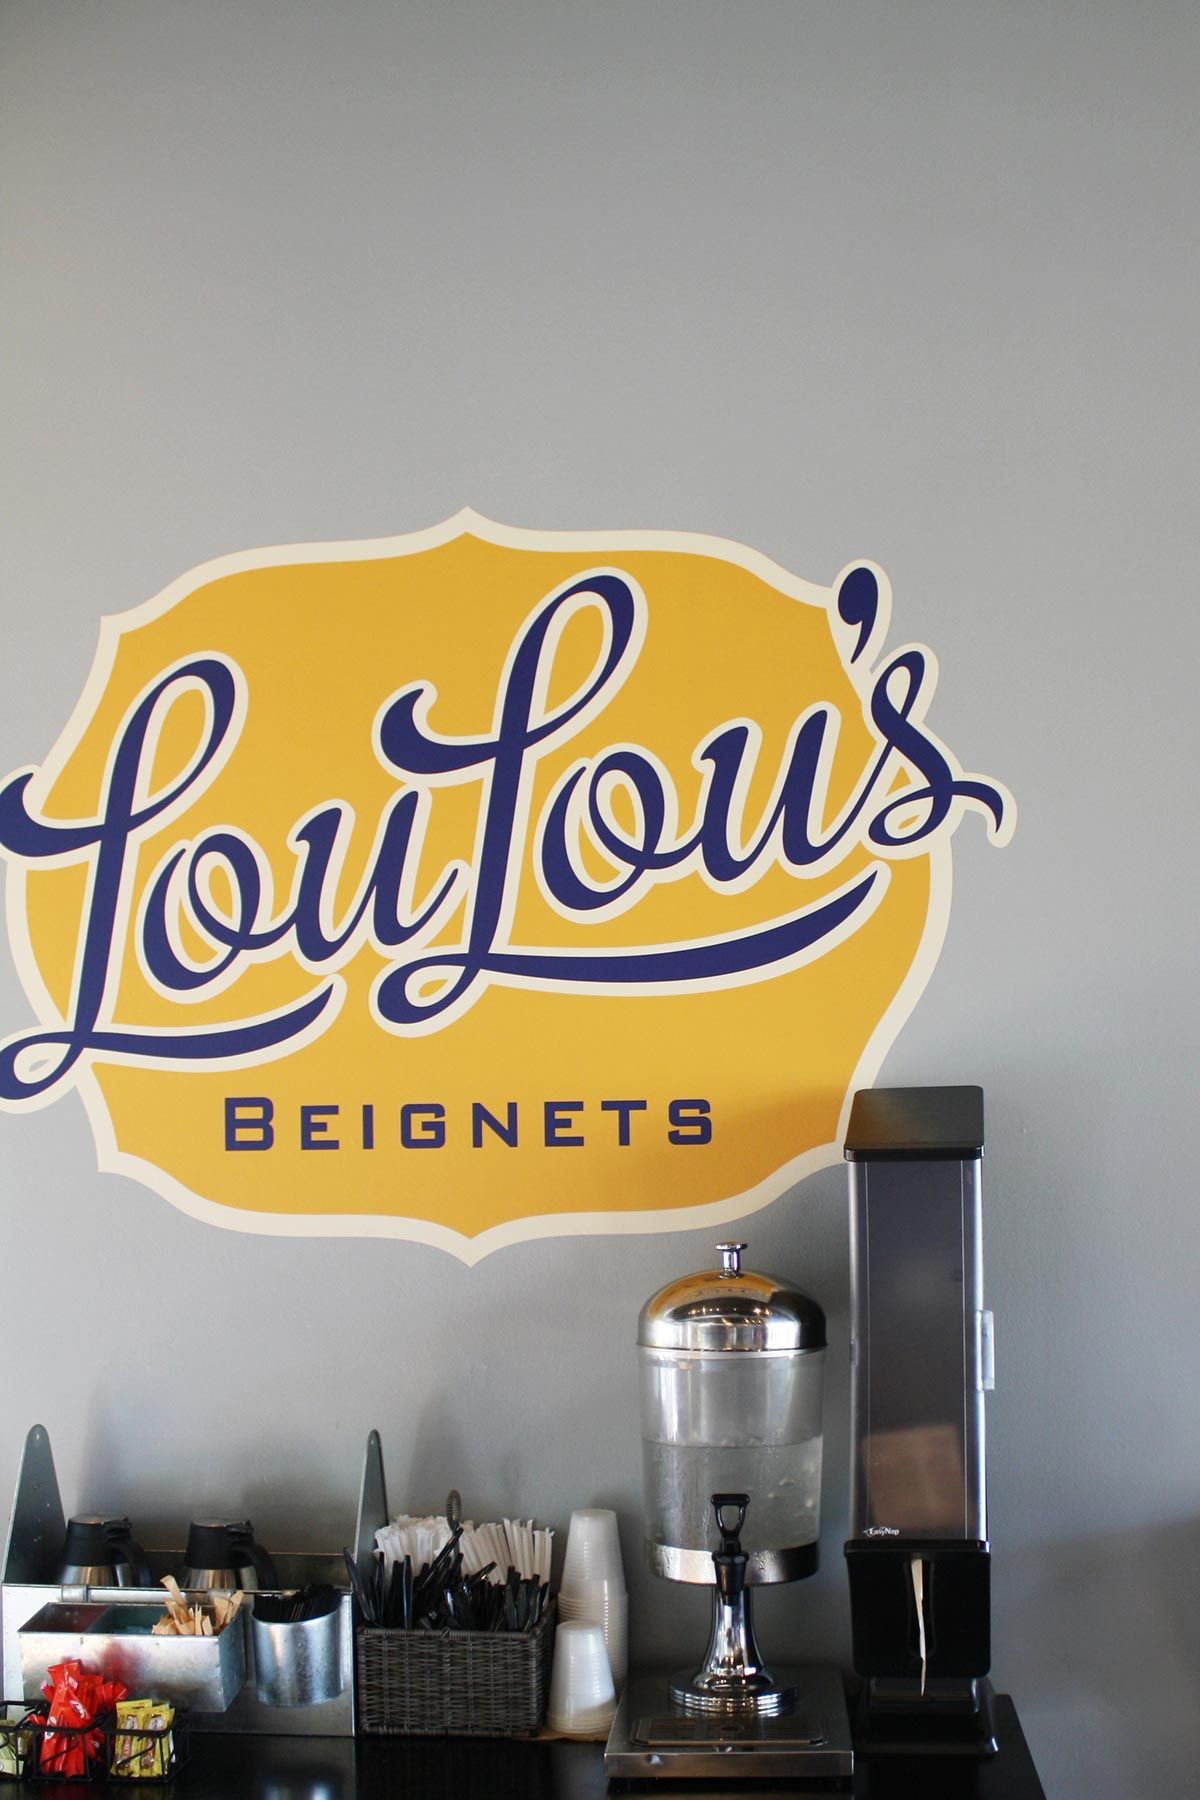 Lou Lou’s Beignets